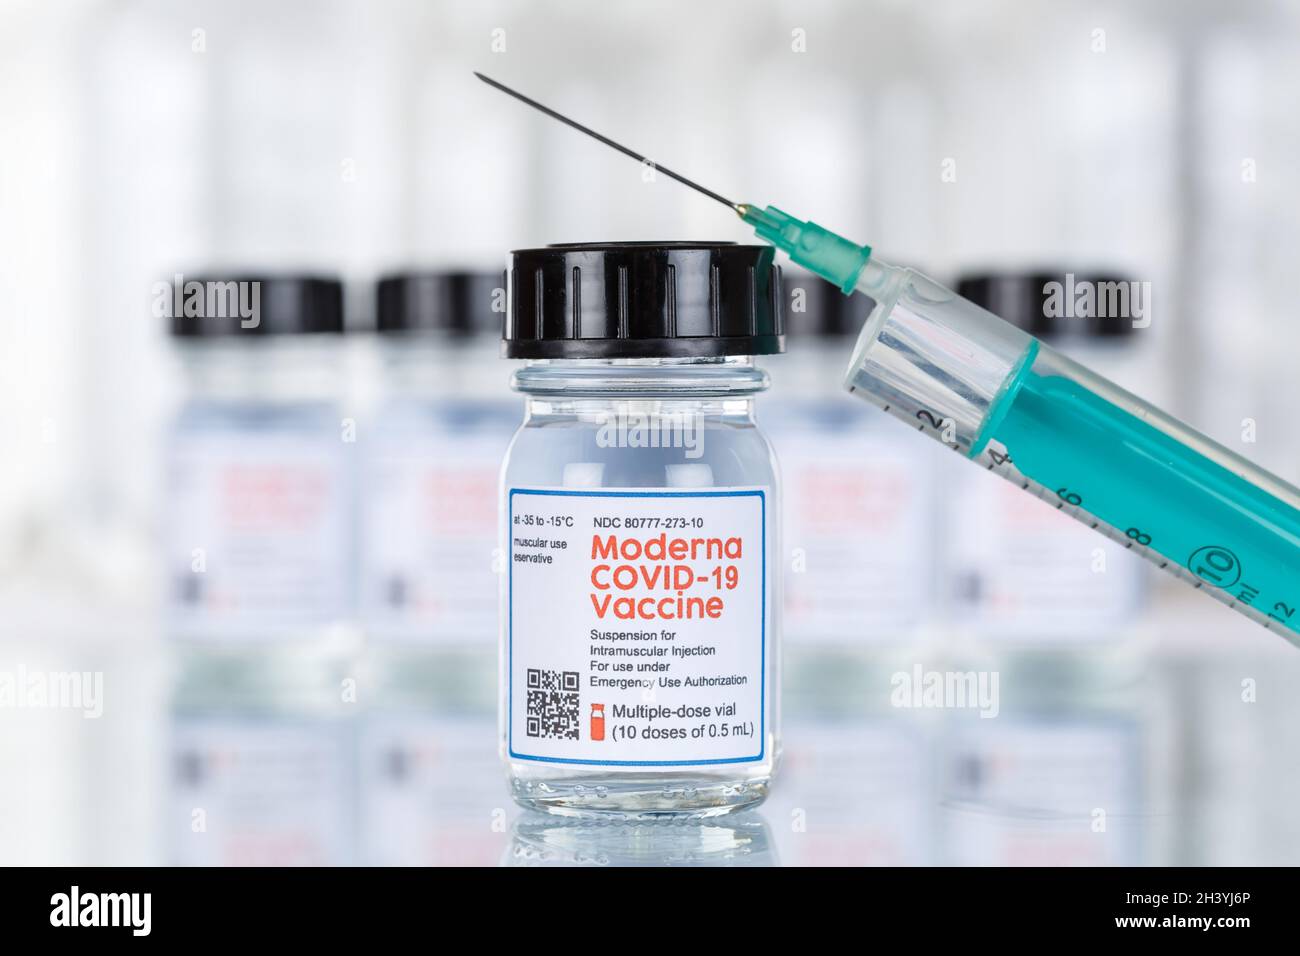 Moderna Corona Virus Vaccine Coronavirus COVID-19 Covid Vaccination Syringe Vaccine Stock Photo